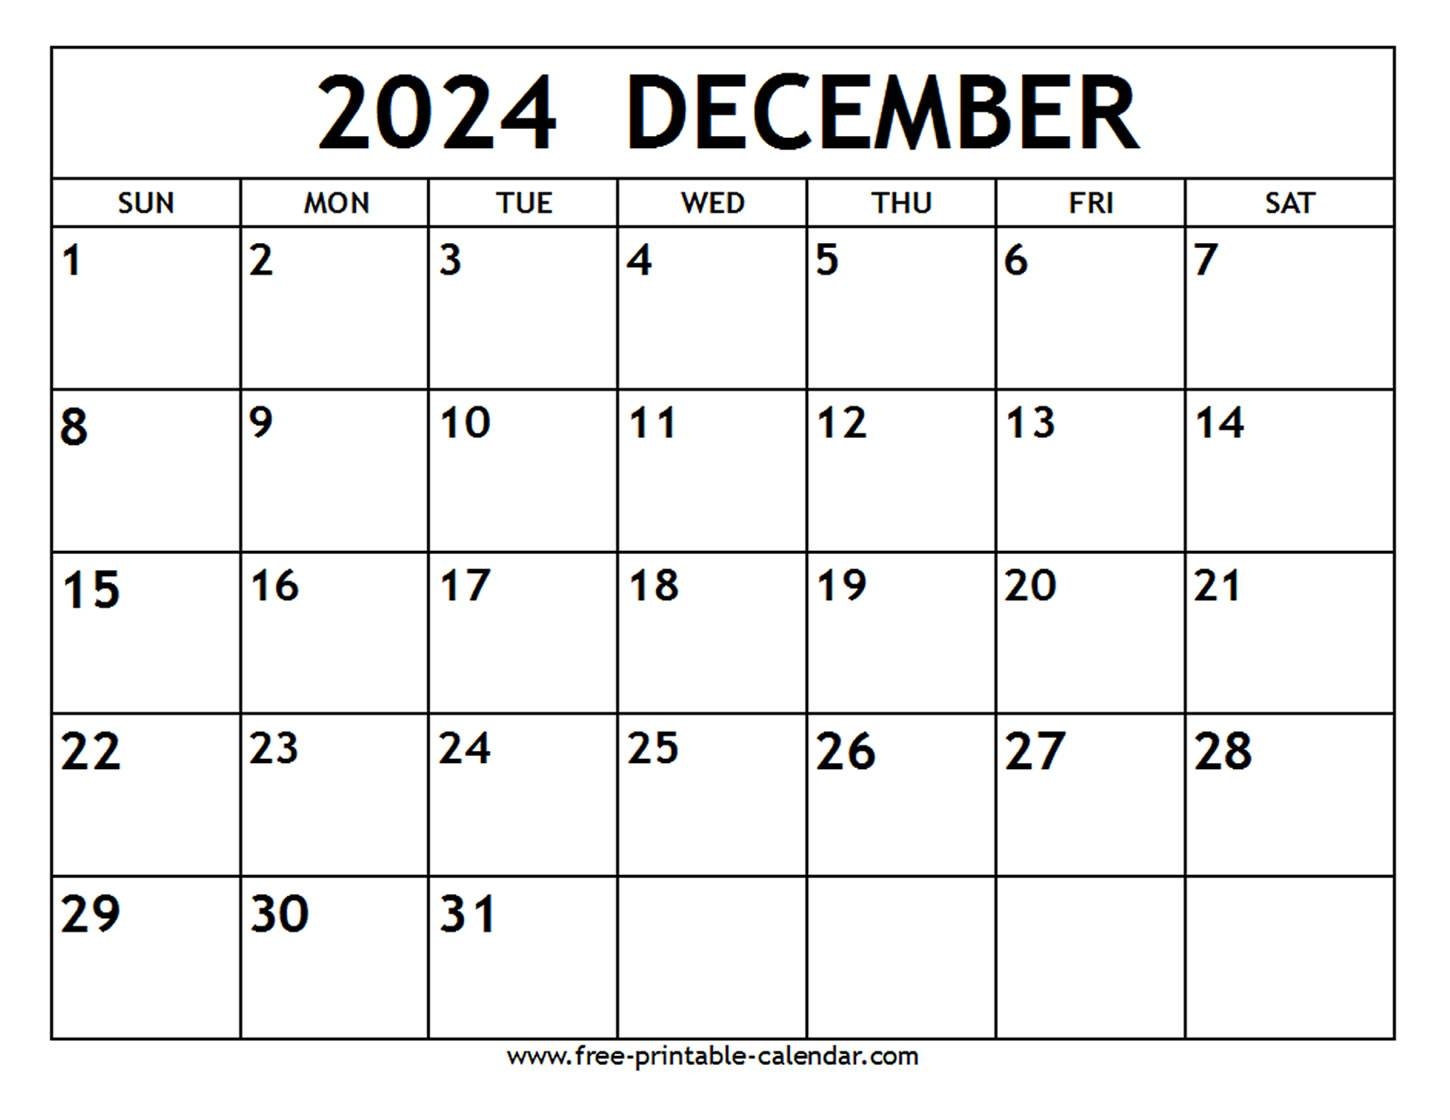 December 2024 Calendar - Free-Printable-Calendar in Free Printable Blank Calendar December 2024